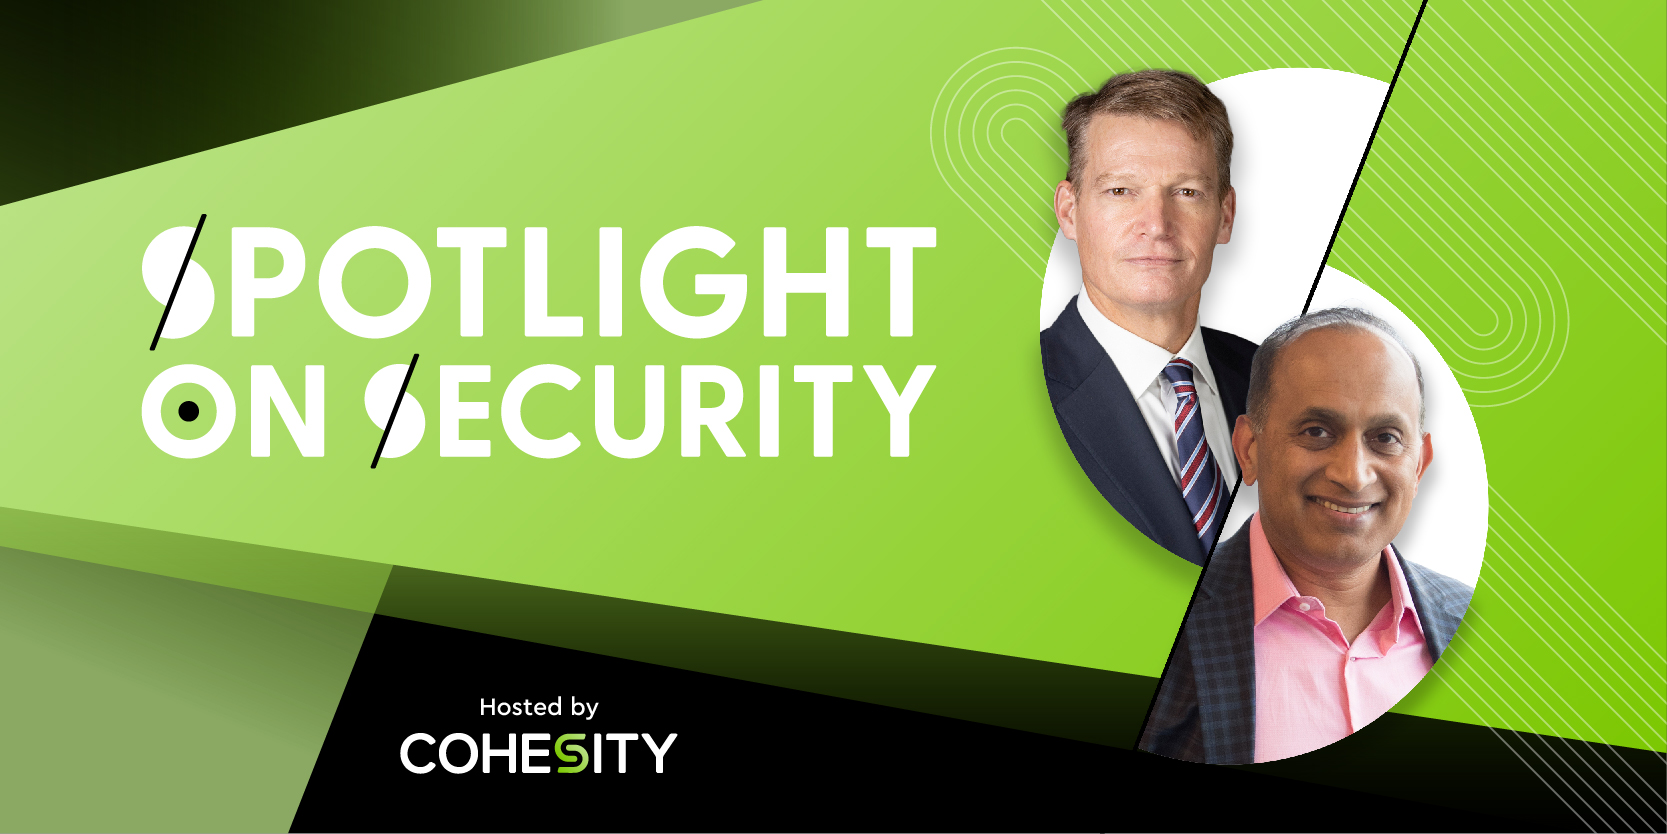 Spotlight On Security Episode 1 Promo Image